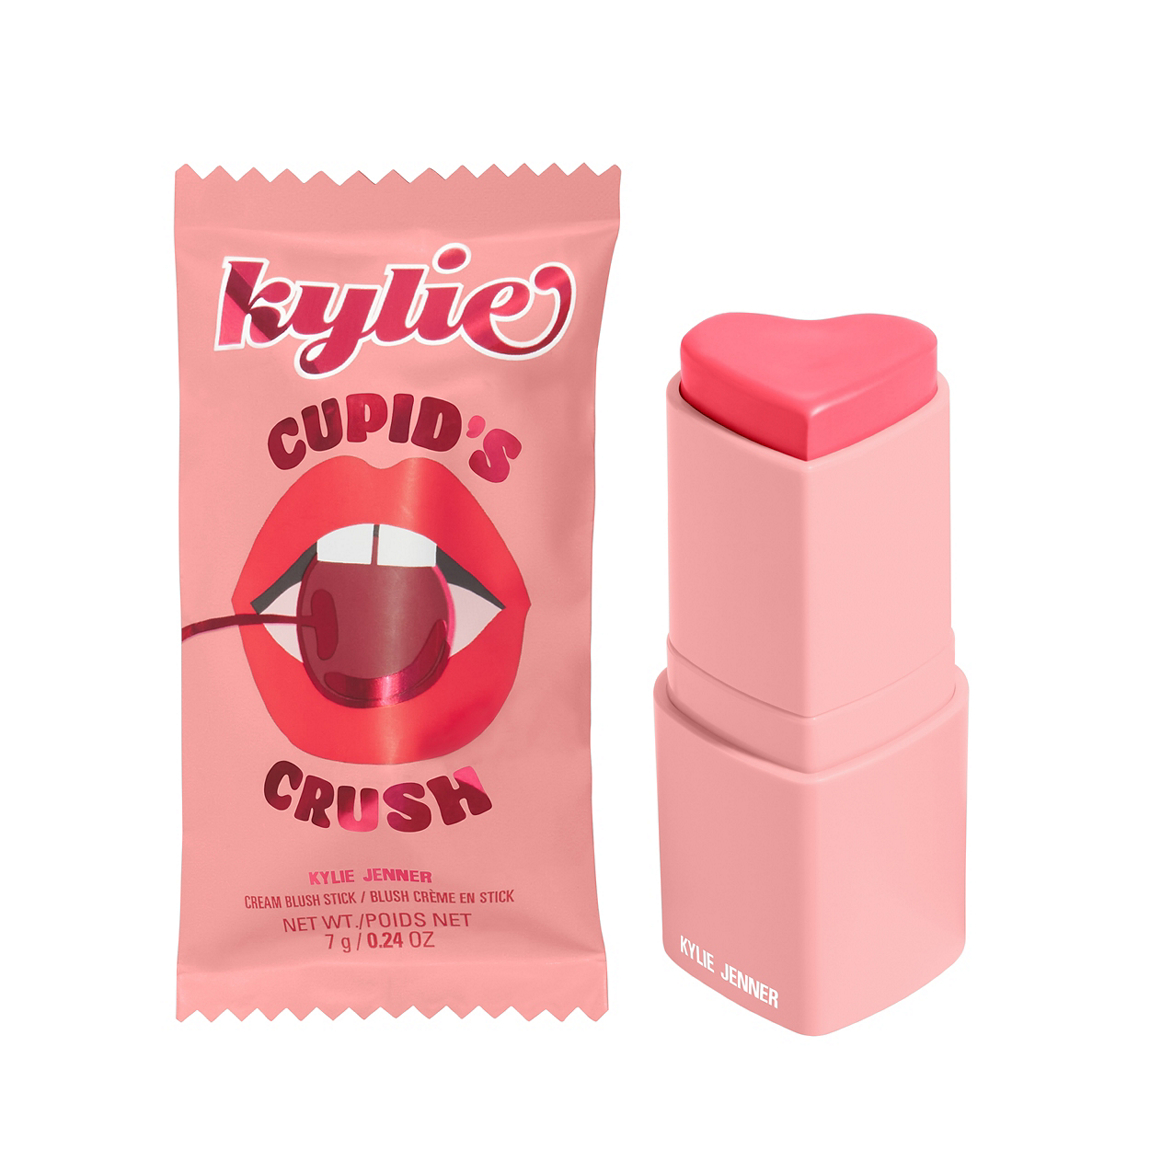 Valentine's Cupid's Crush Blush Stick